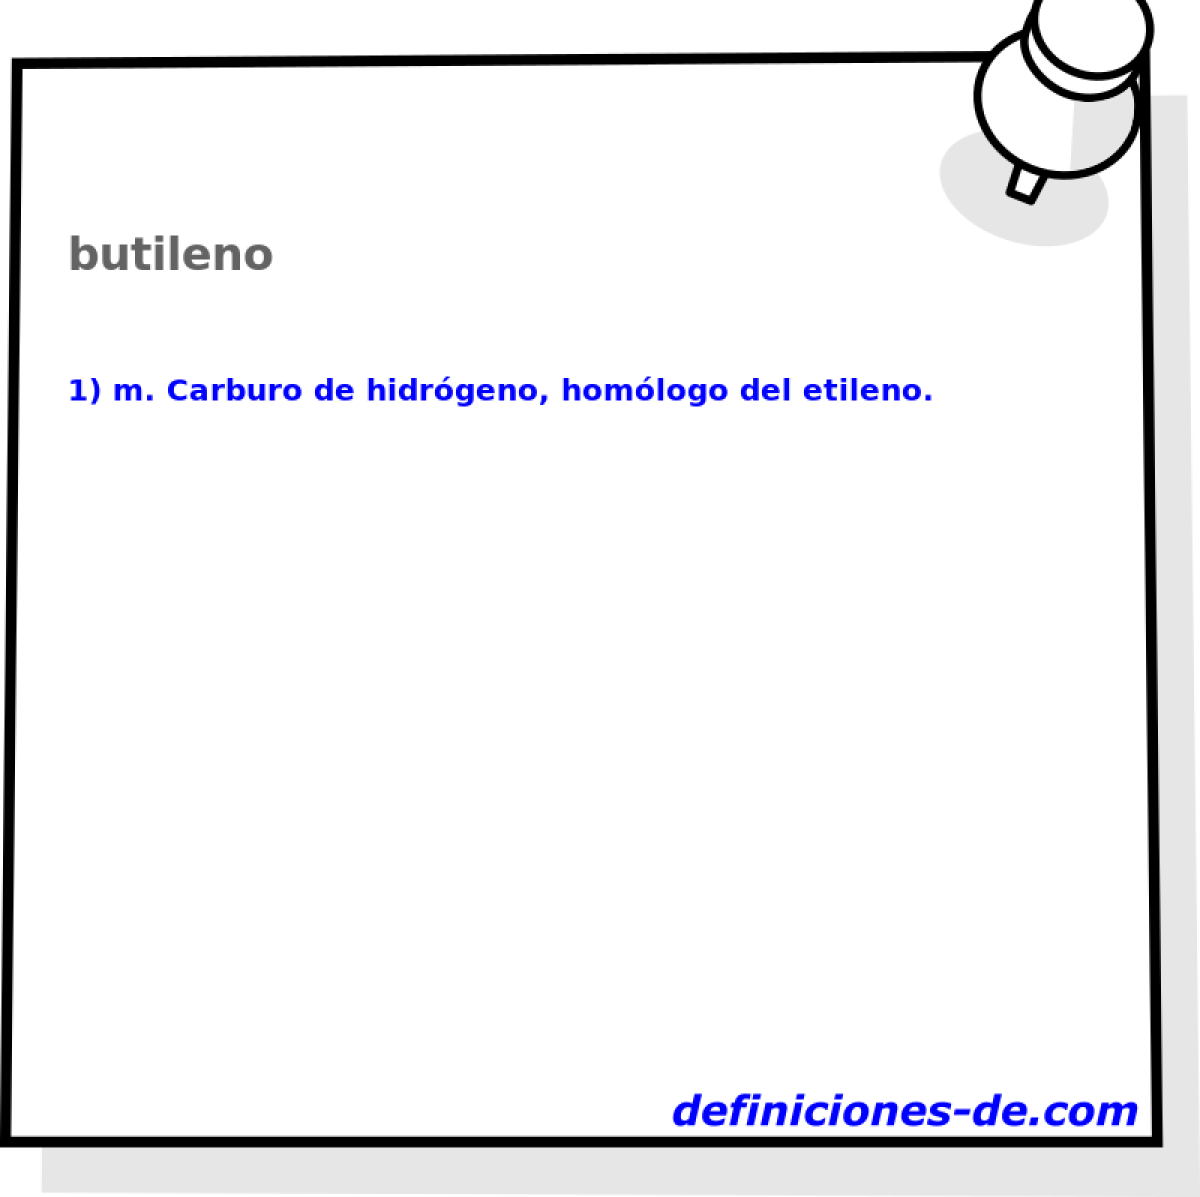 butileno 